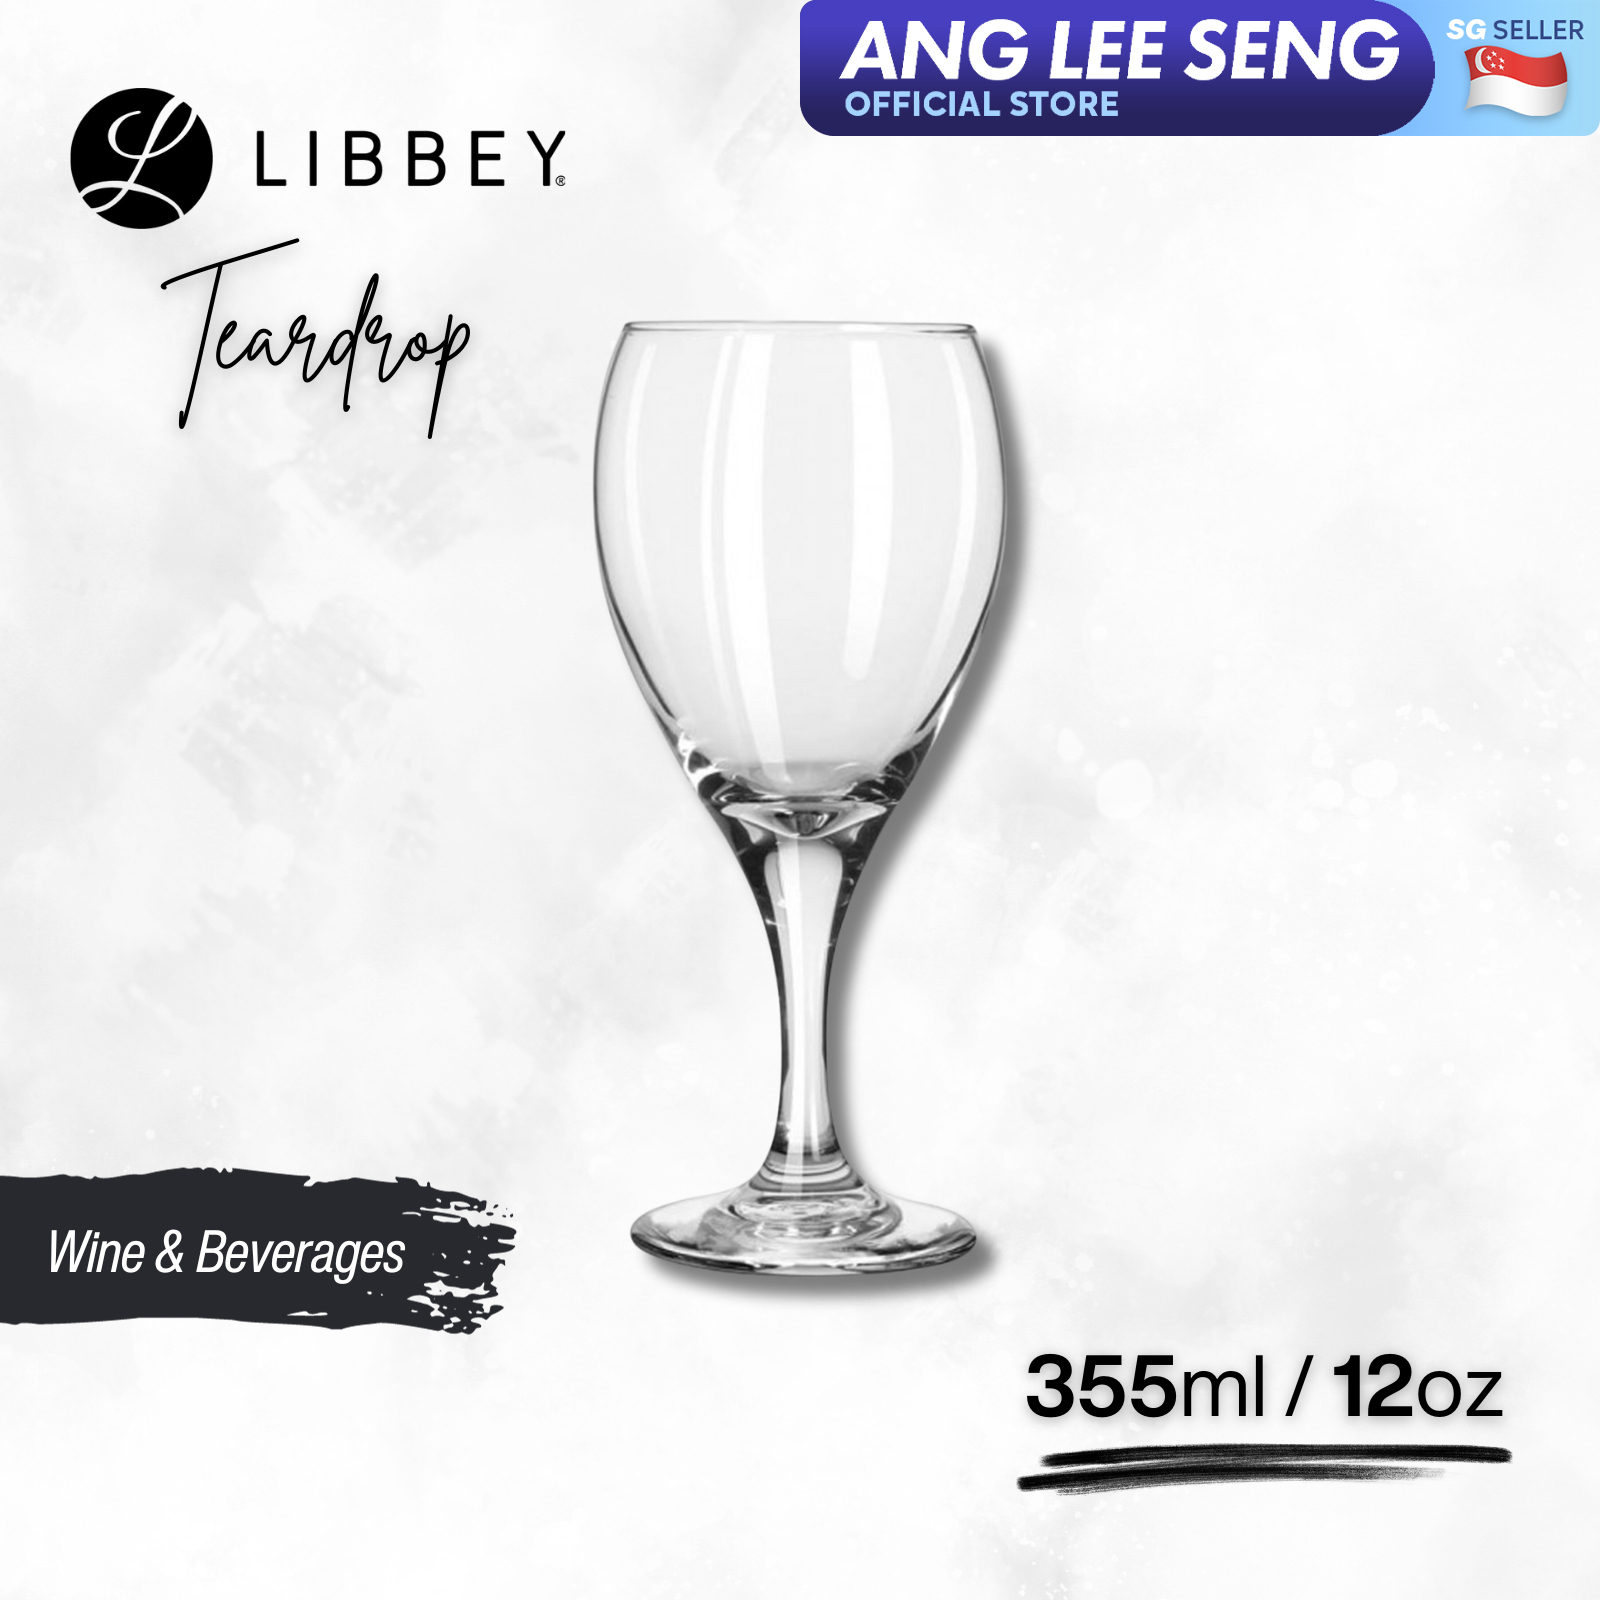 Libbey Teardrop 3911 Wine Glass 355ml/12oz, 2-pc/6-pc Set